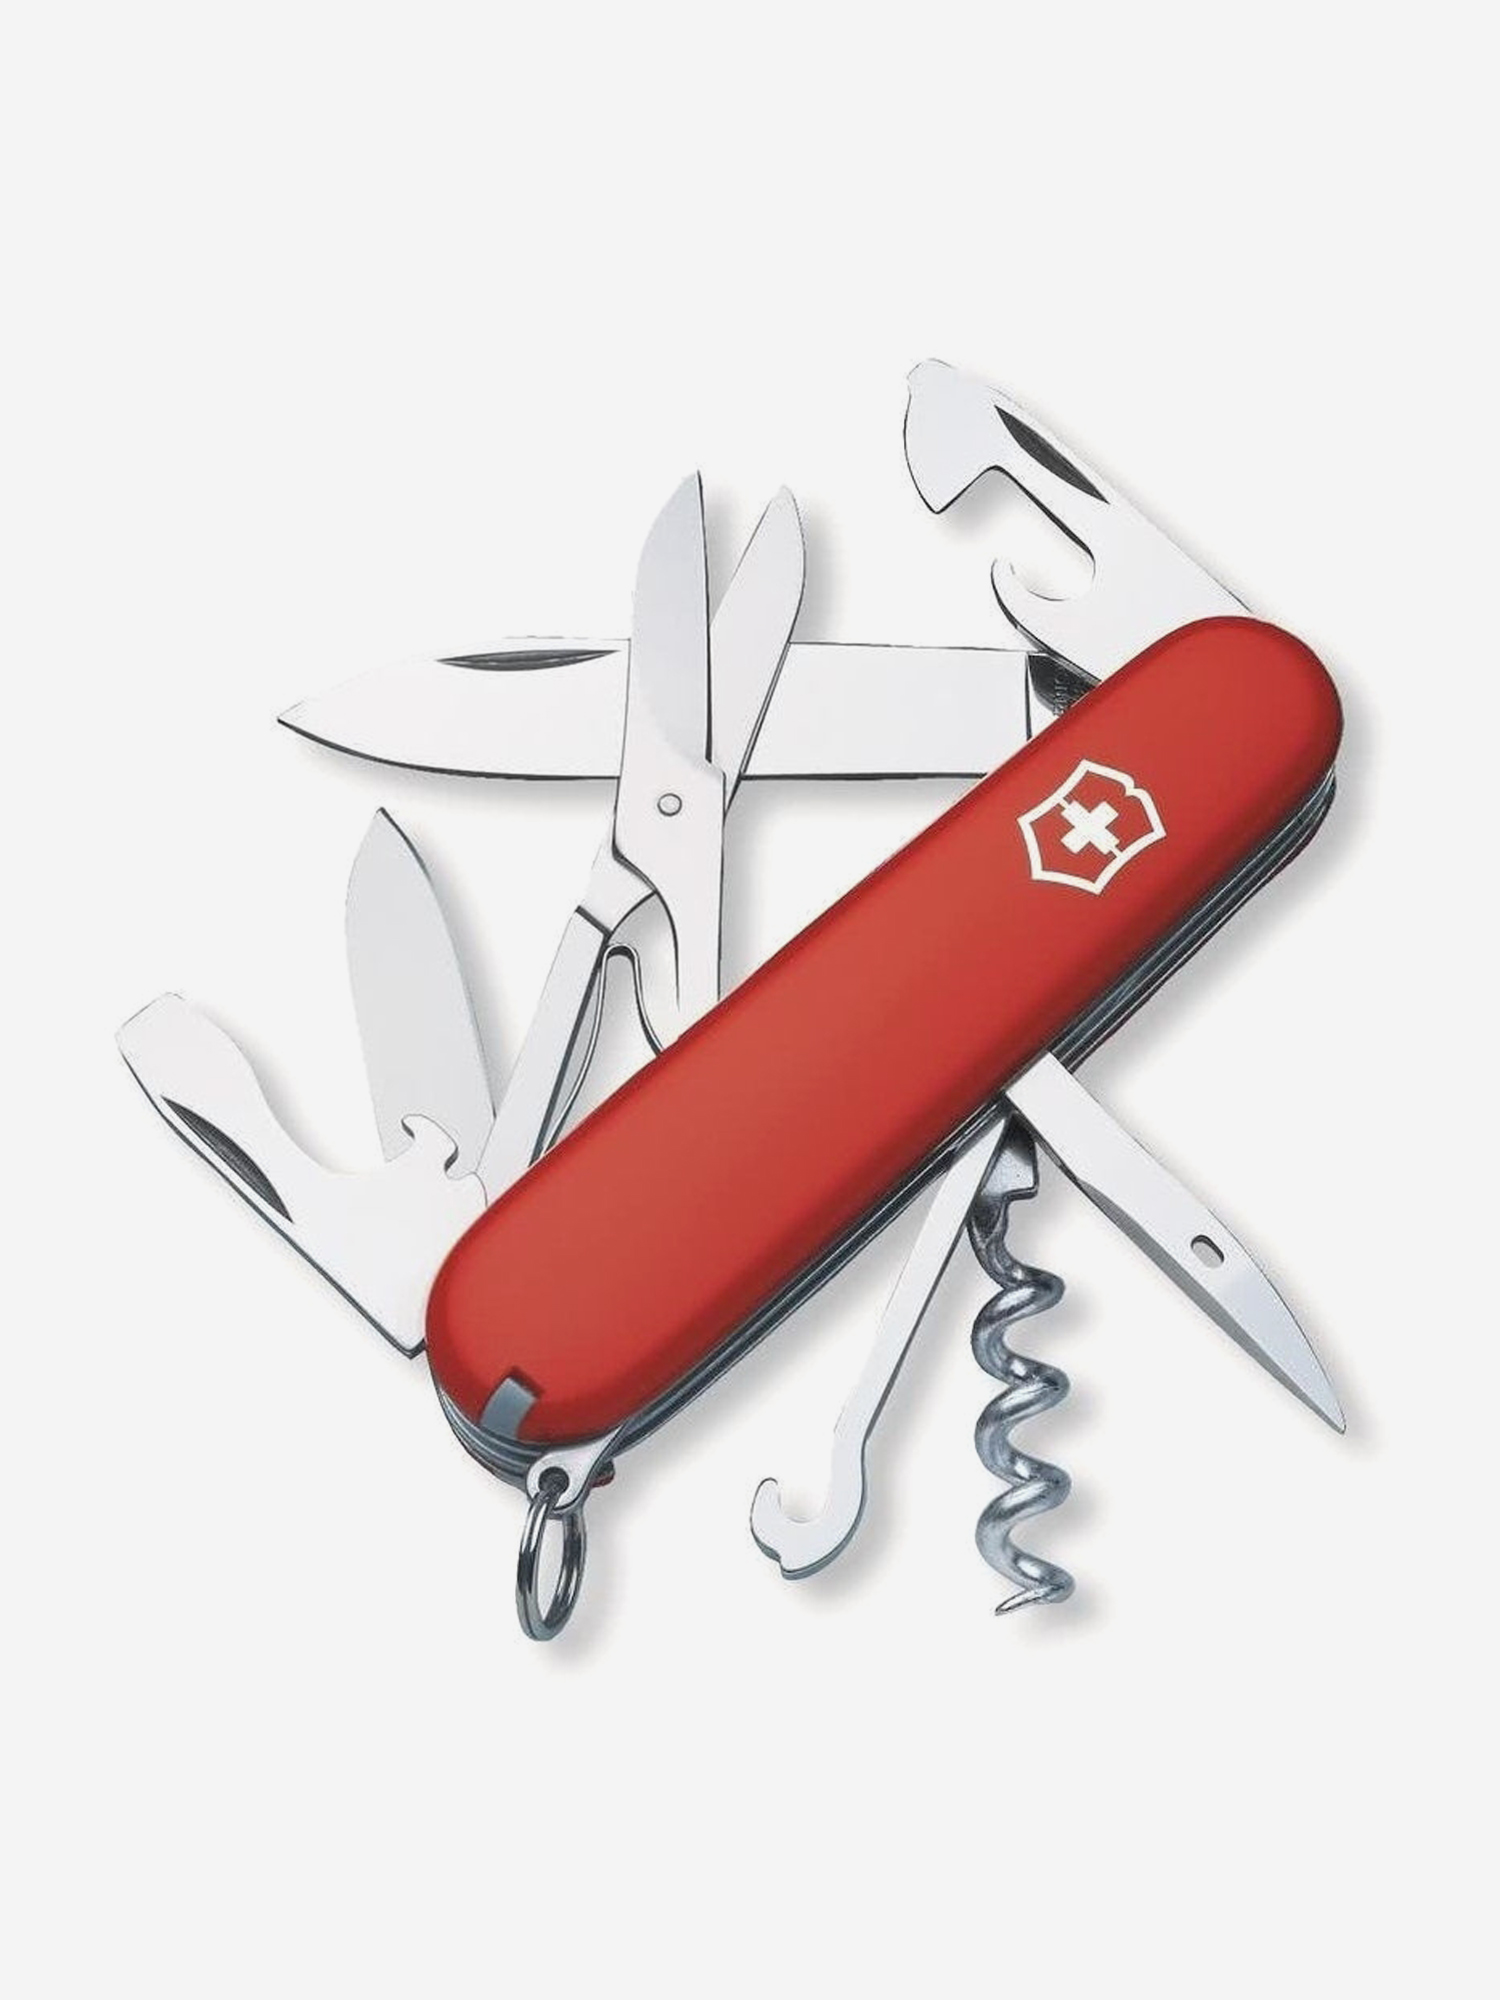 Нож складной Victorinox Climber, 91 мм, 14 функций, Красный нож складной victorinox super tinker 91 мм 14 функций красный